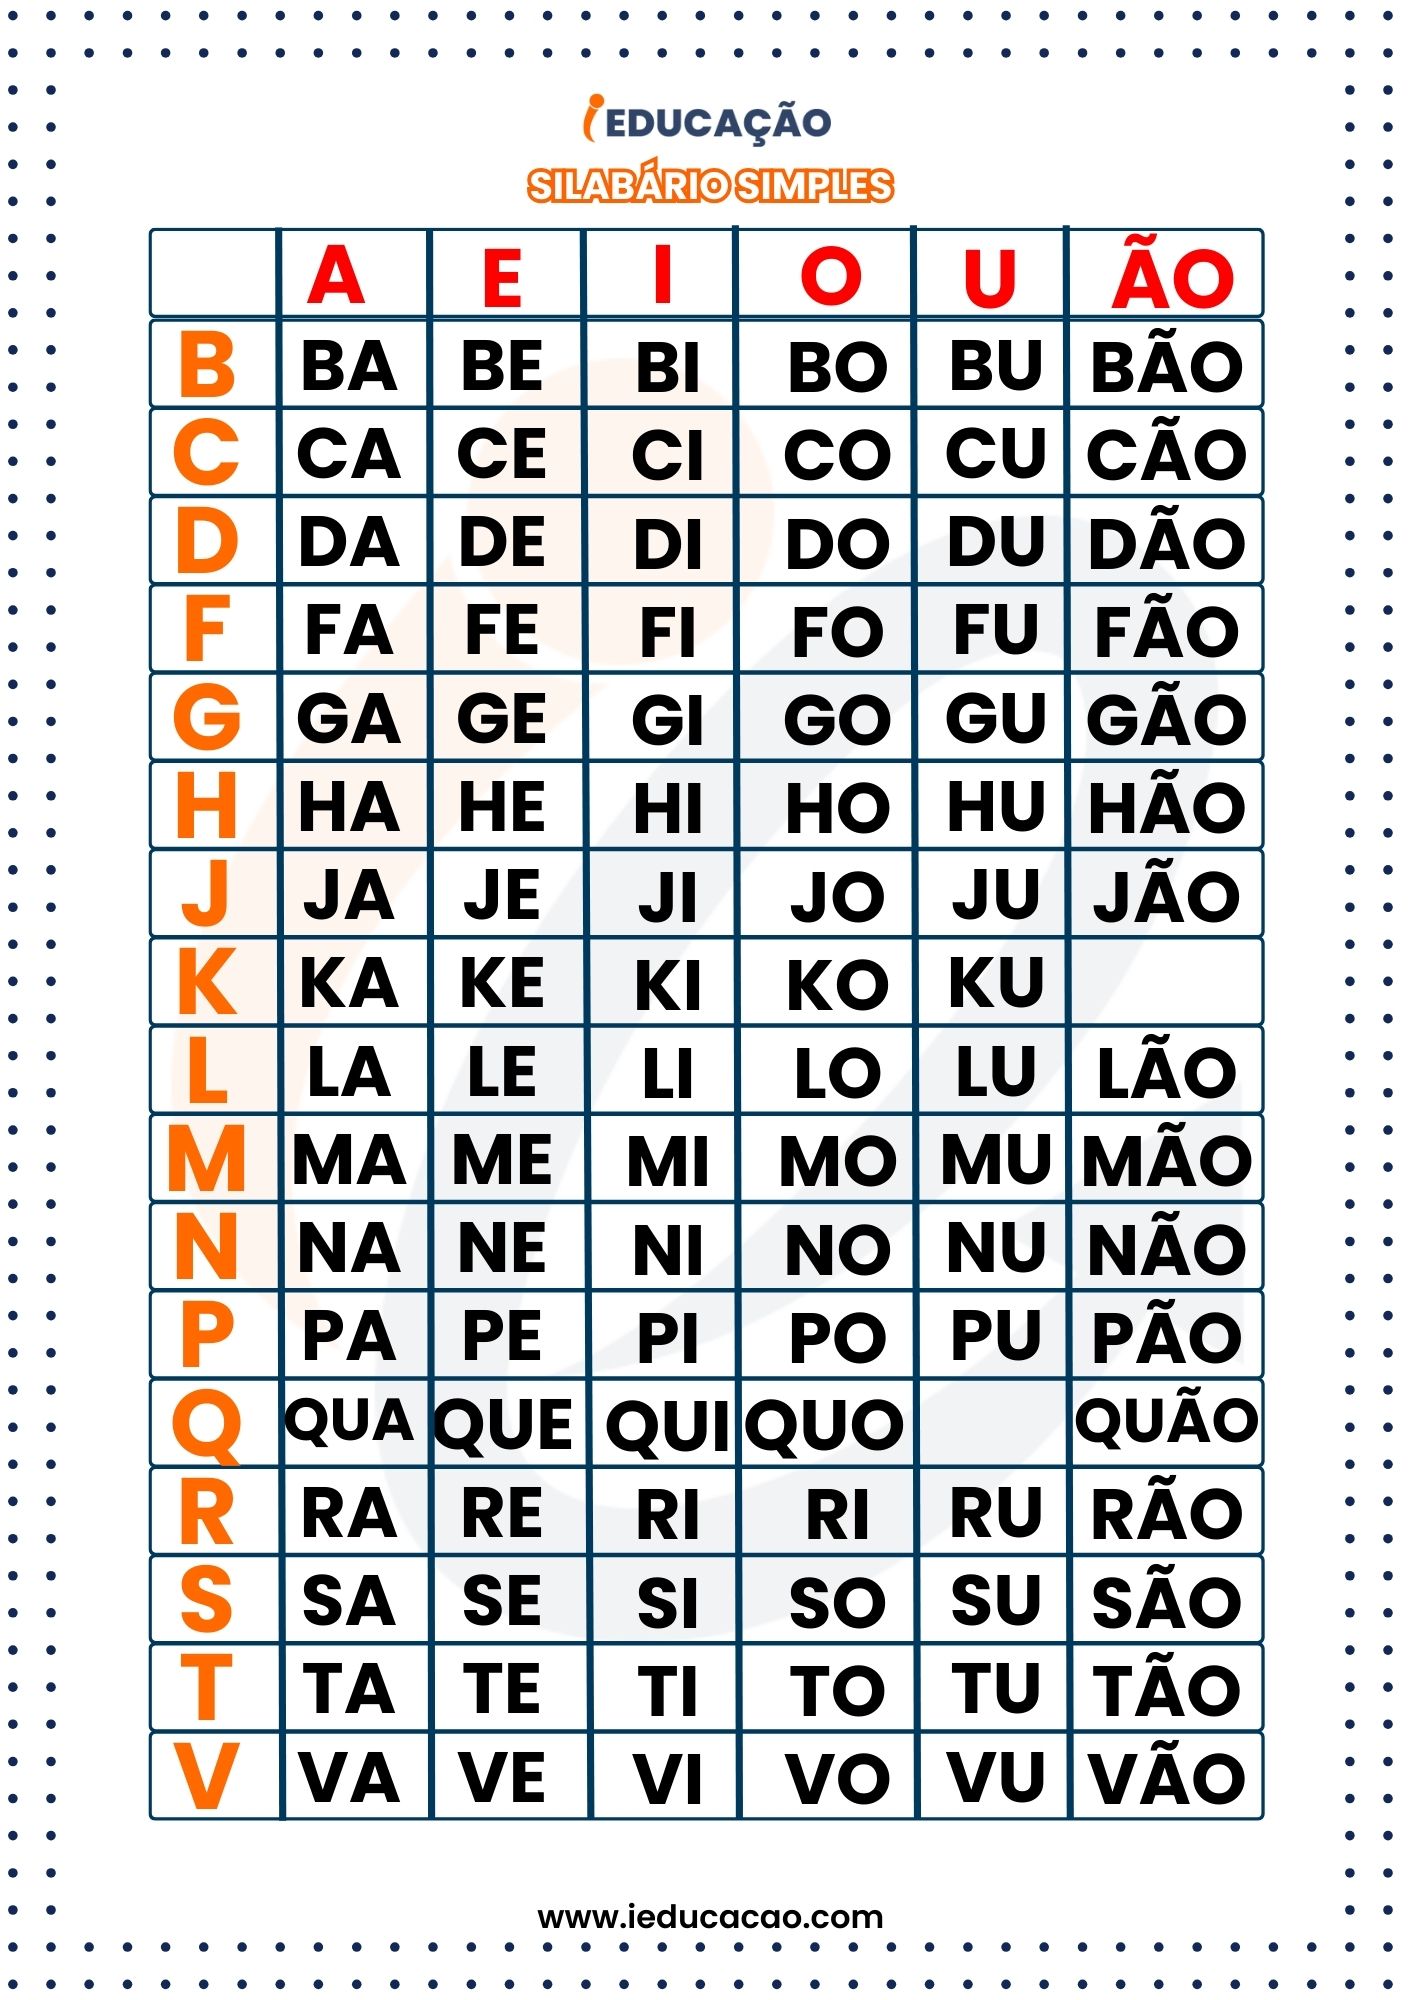 Silabário Simples com letras maiúsculas